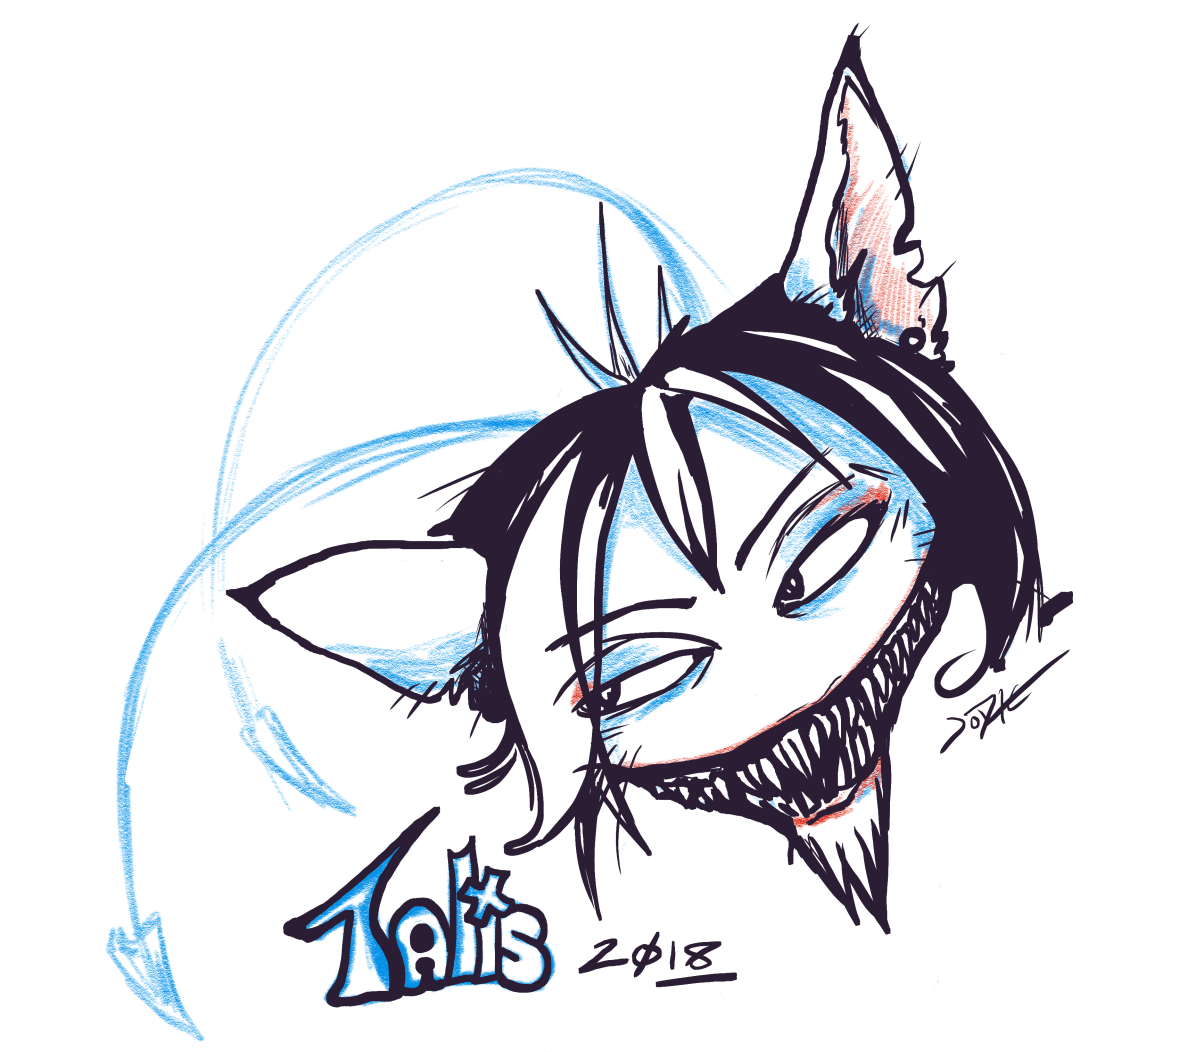 A sketch of Talis the Aisha; looks kinda like a cat with four ears, pointy teeth, and emo hair.